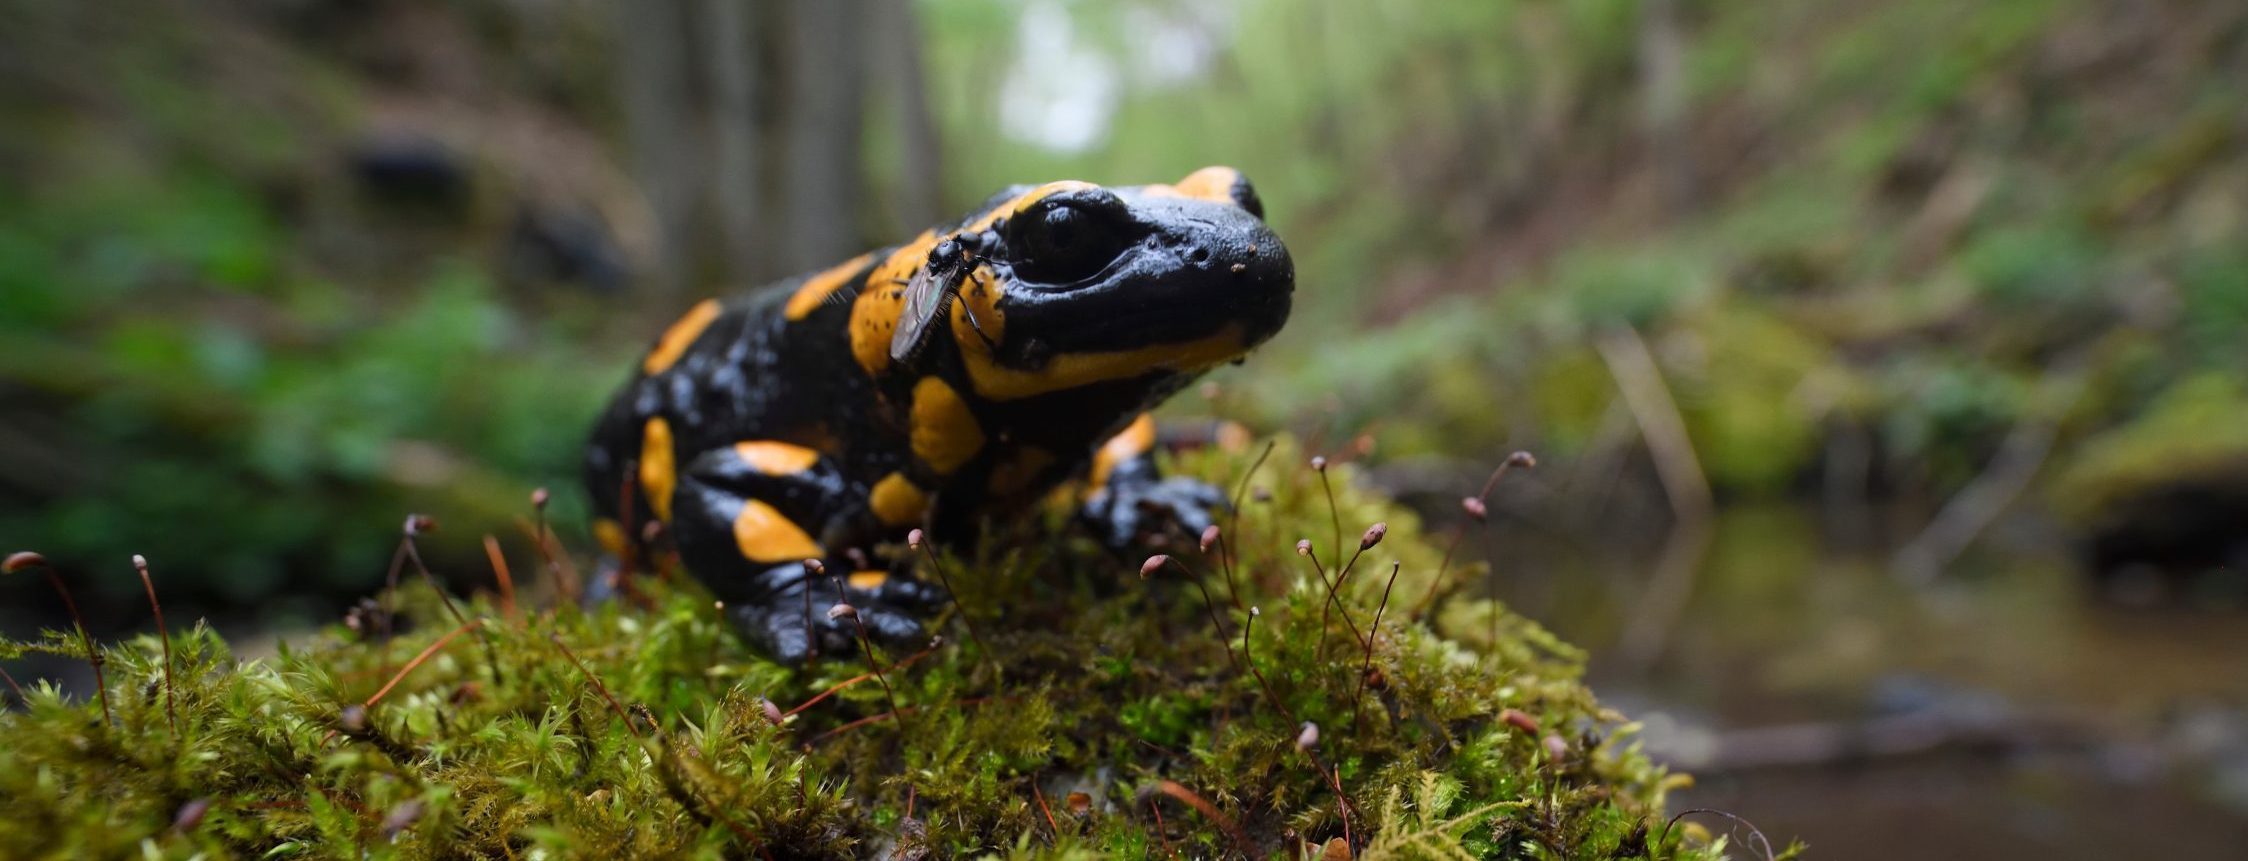 An orange and black salamander sitting on a mossy stone.